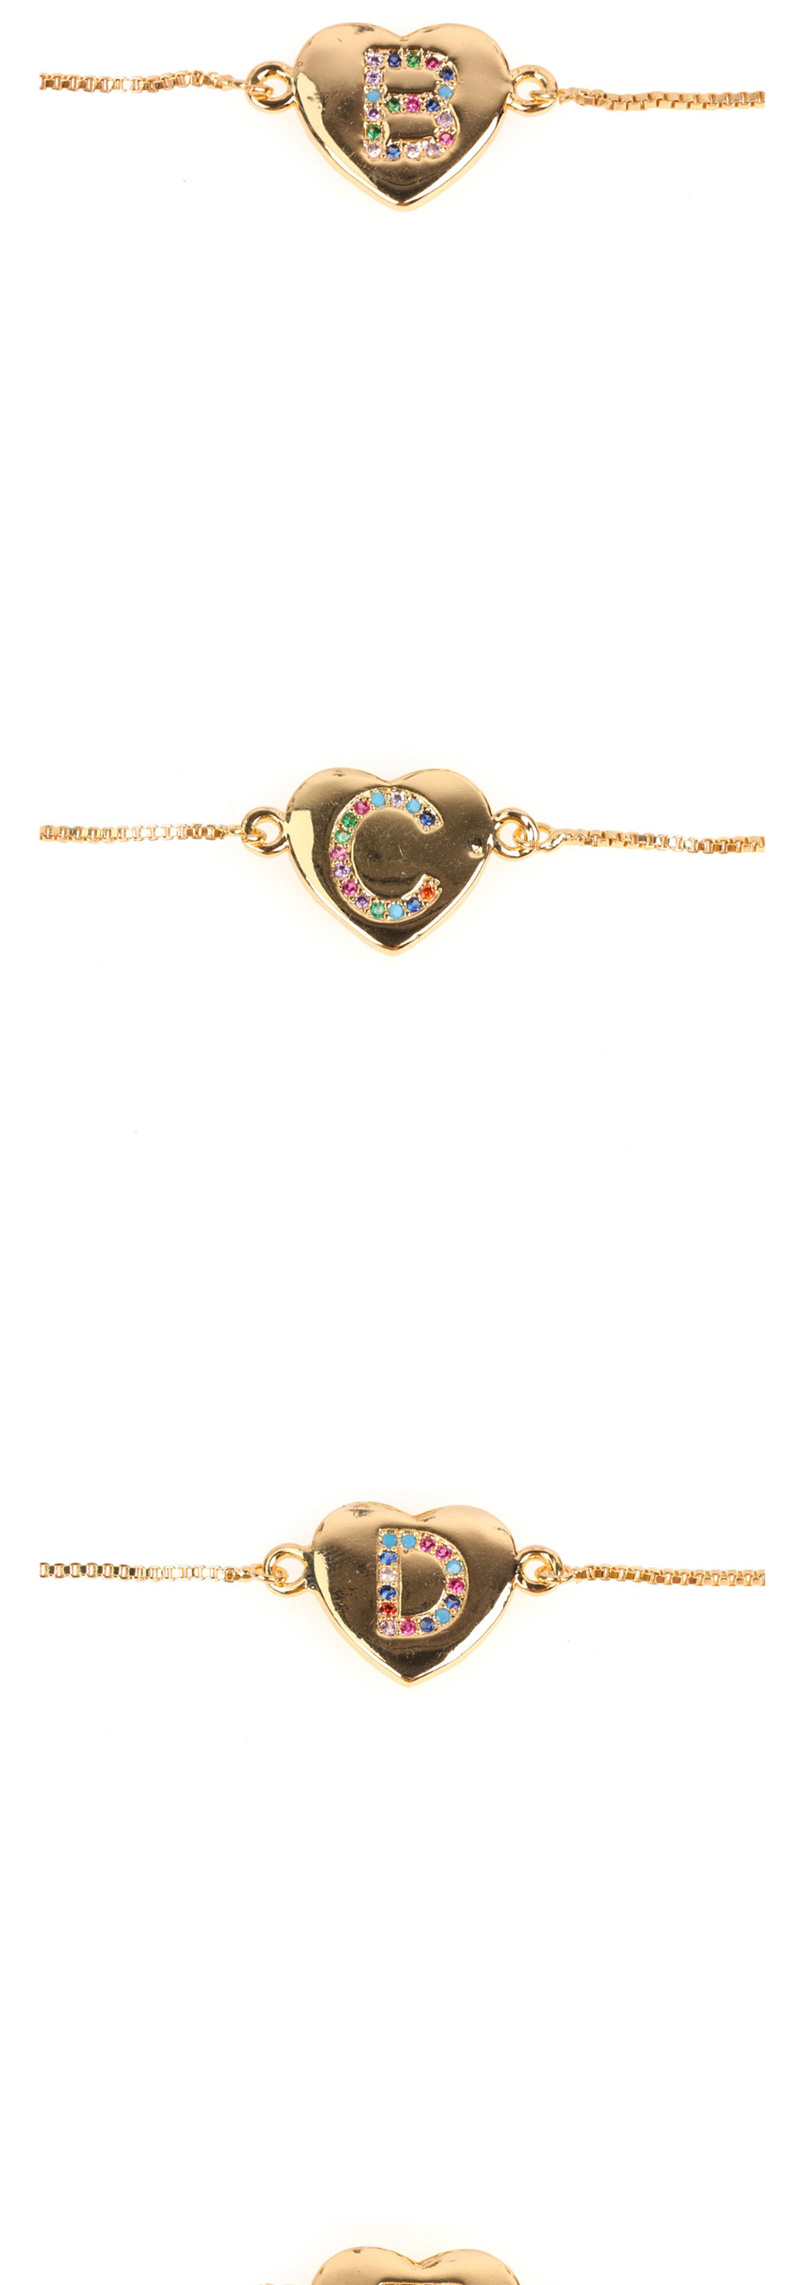 Fashion Q Golden Heart Bracelet With Diamonds And Letters,Bracelets